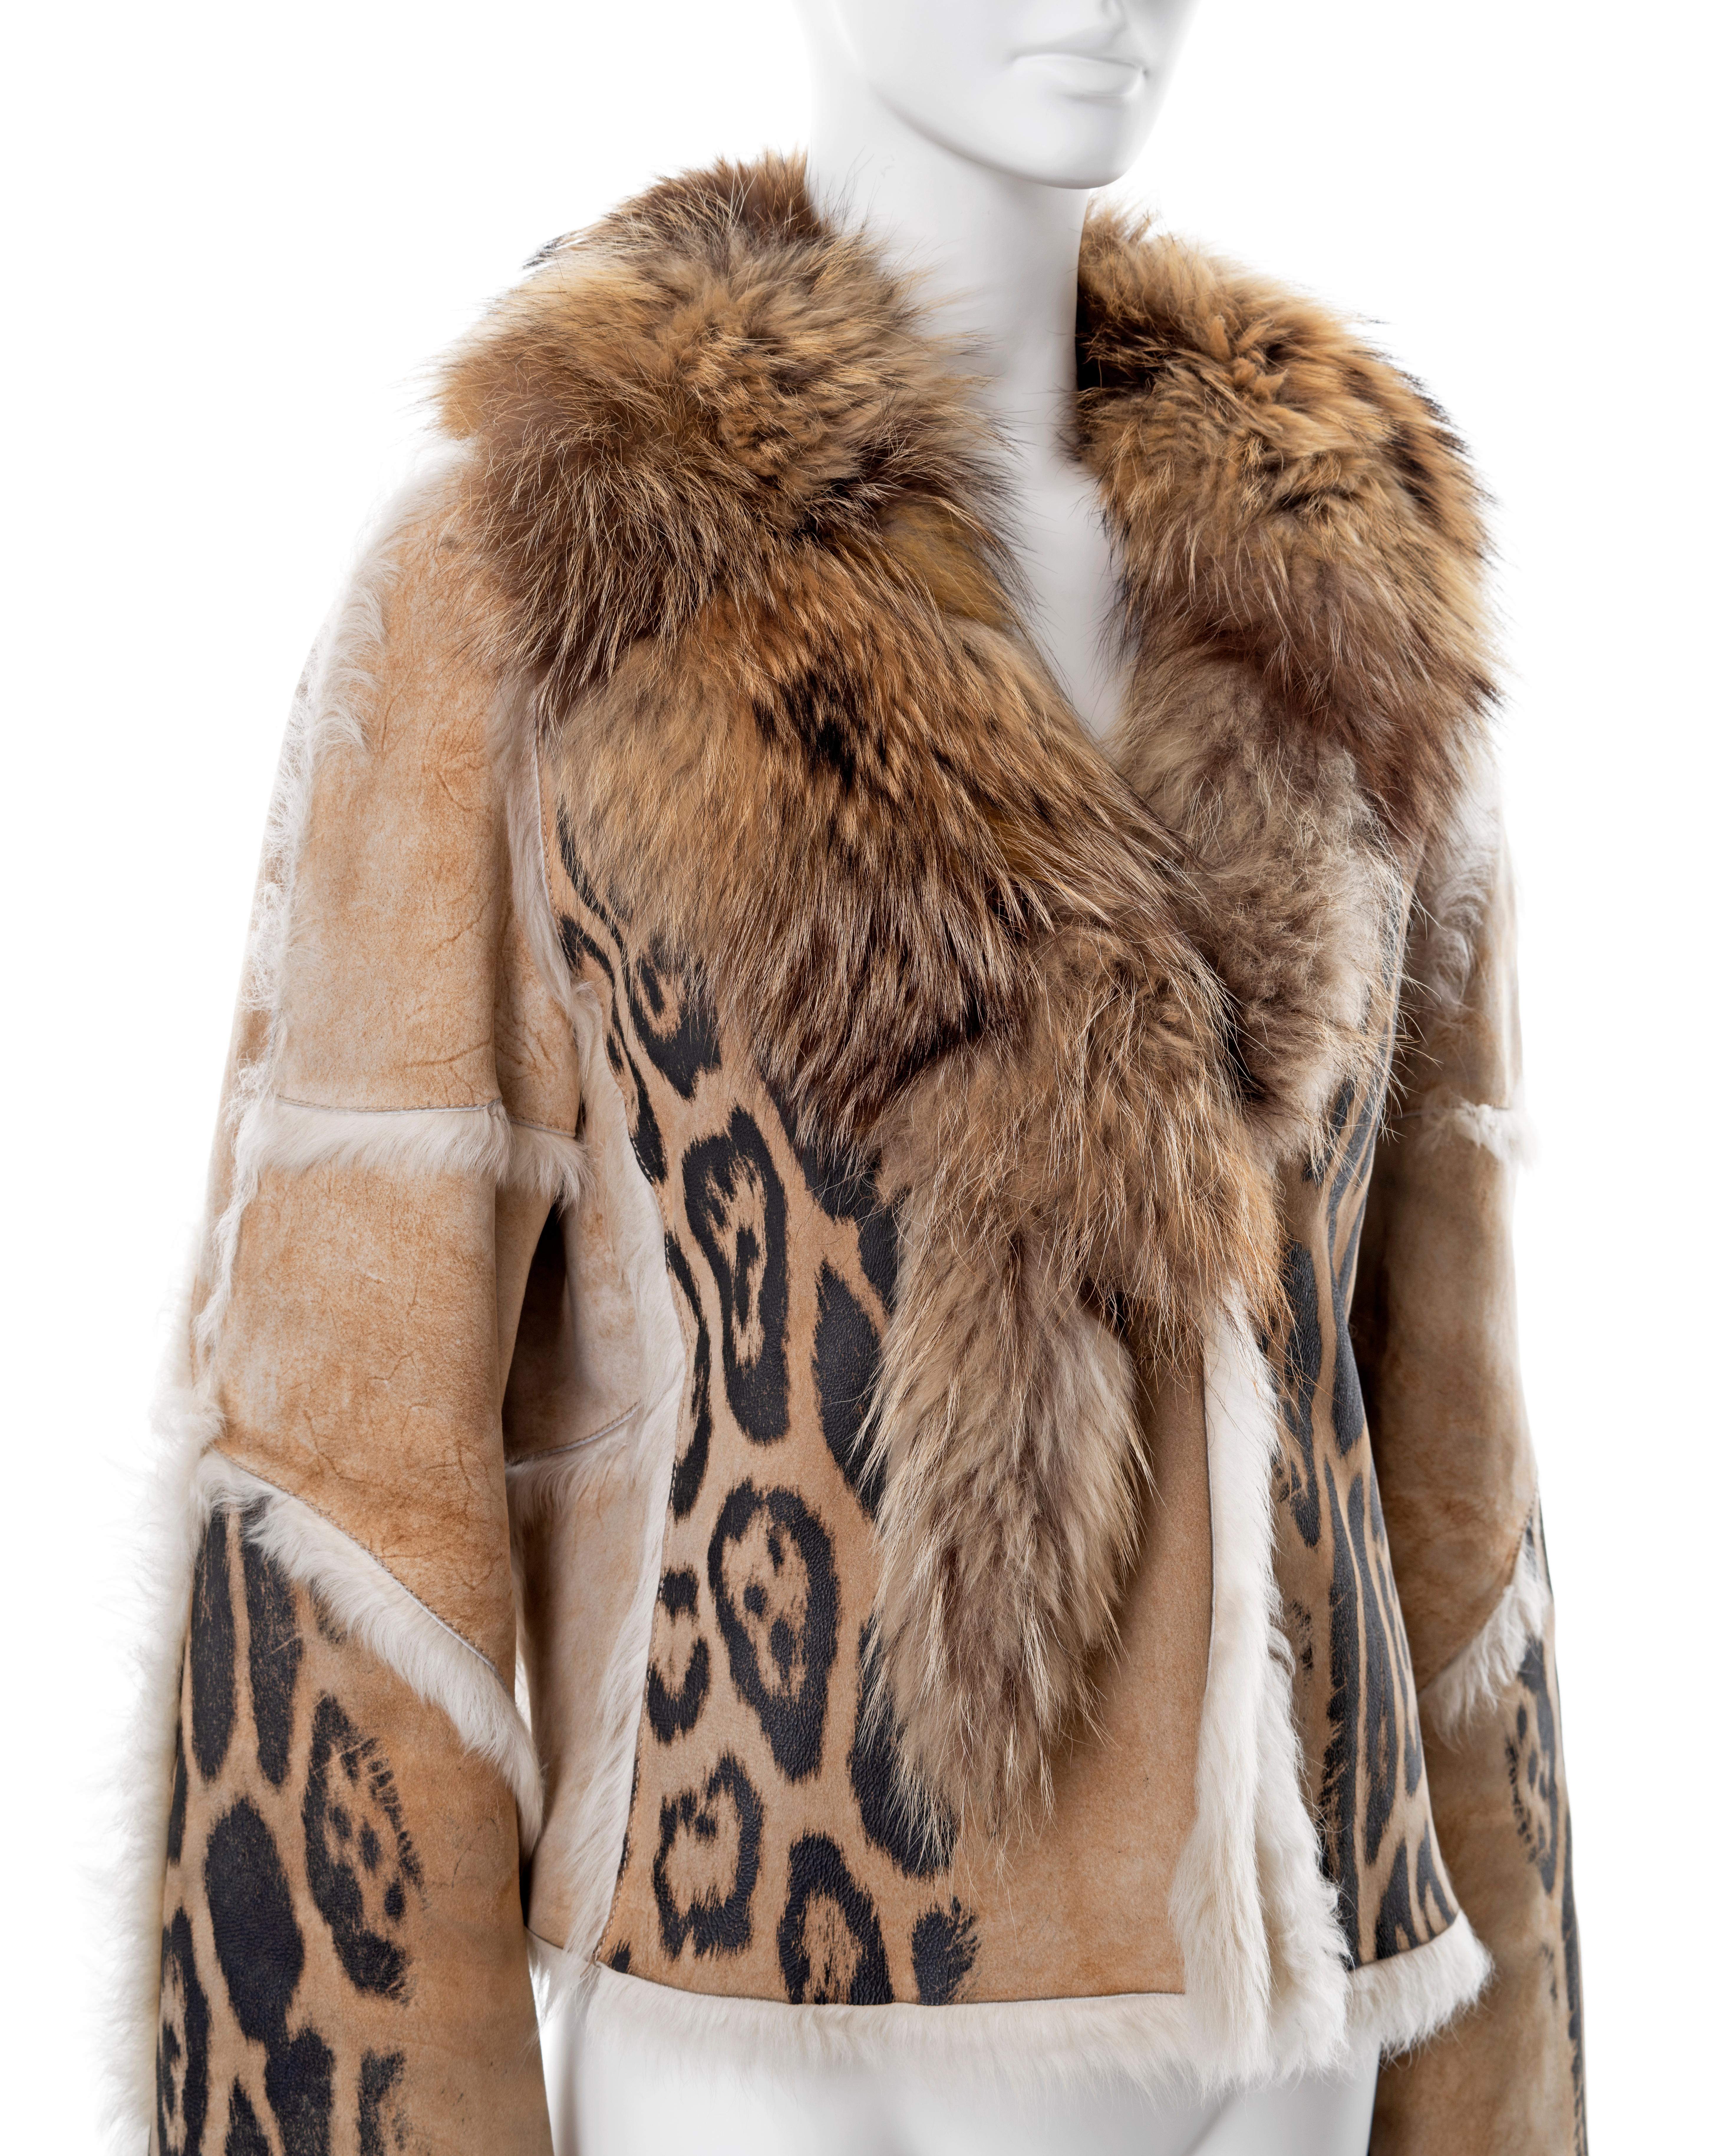 Roberto Cavalli leopard print sheepskin jacket with fox fur collar, fw 2001 2